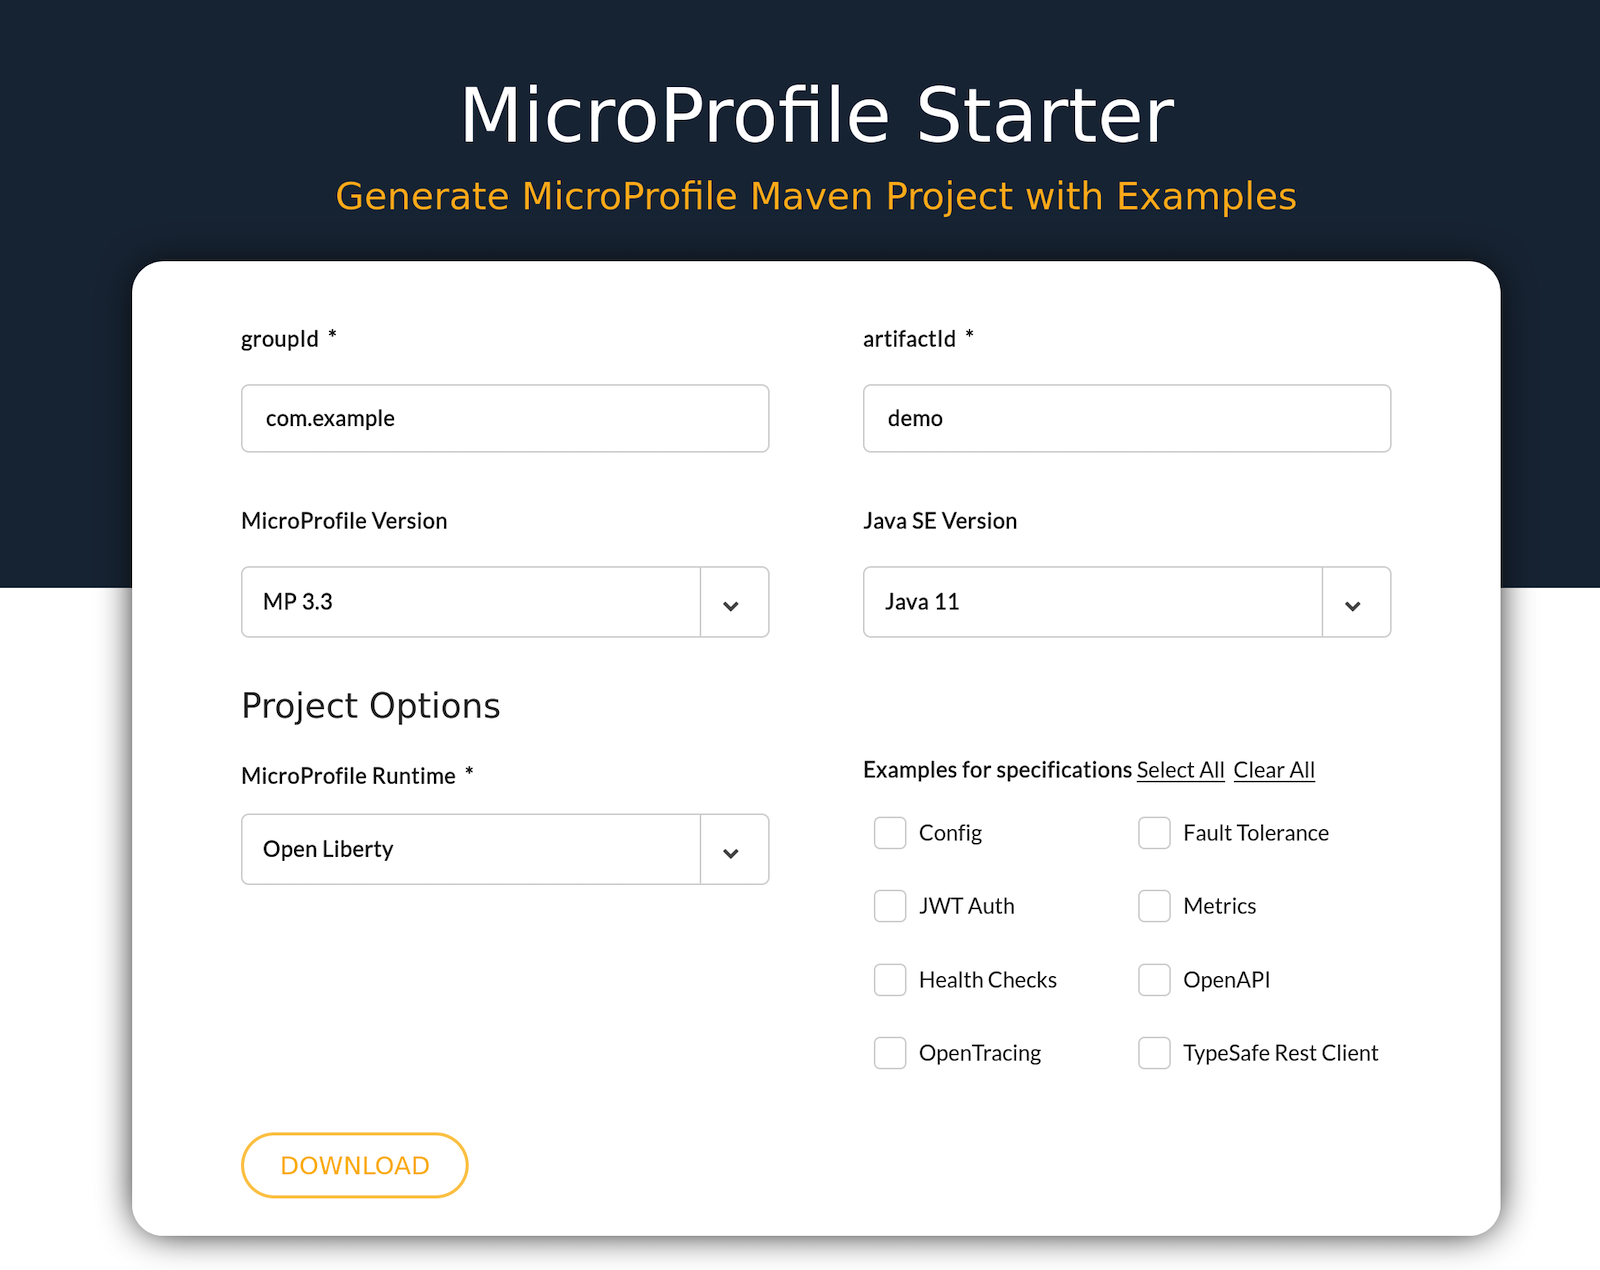 MicroProfile Starter